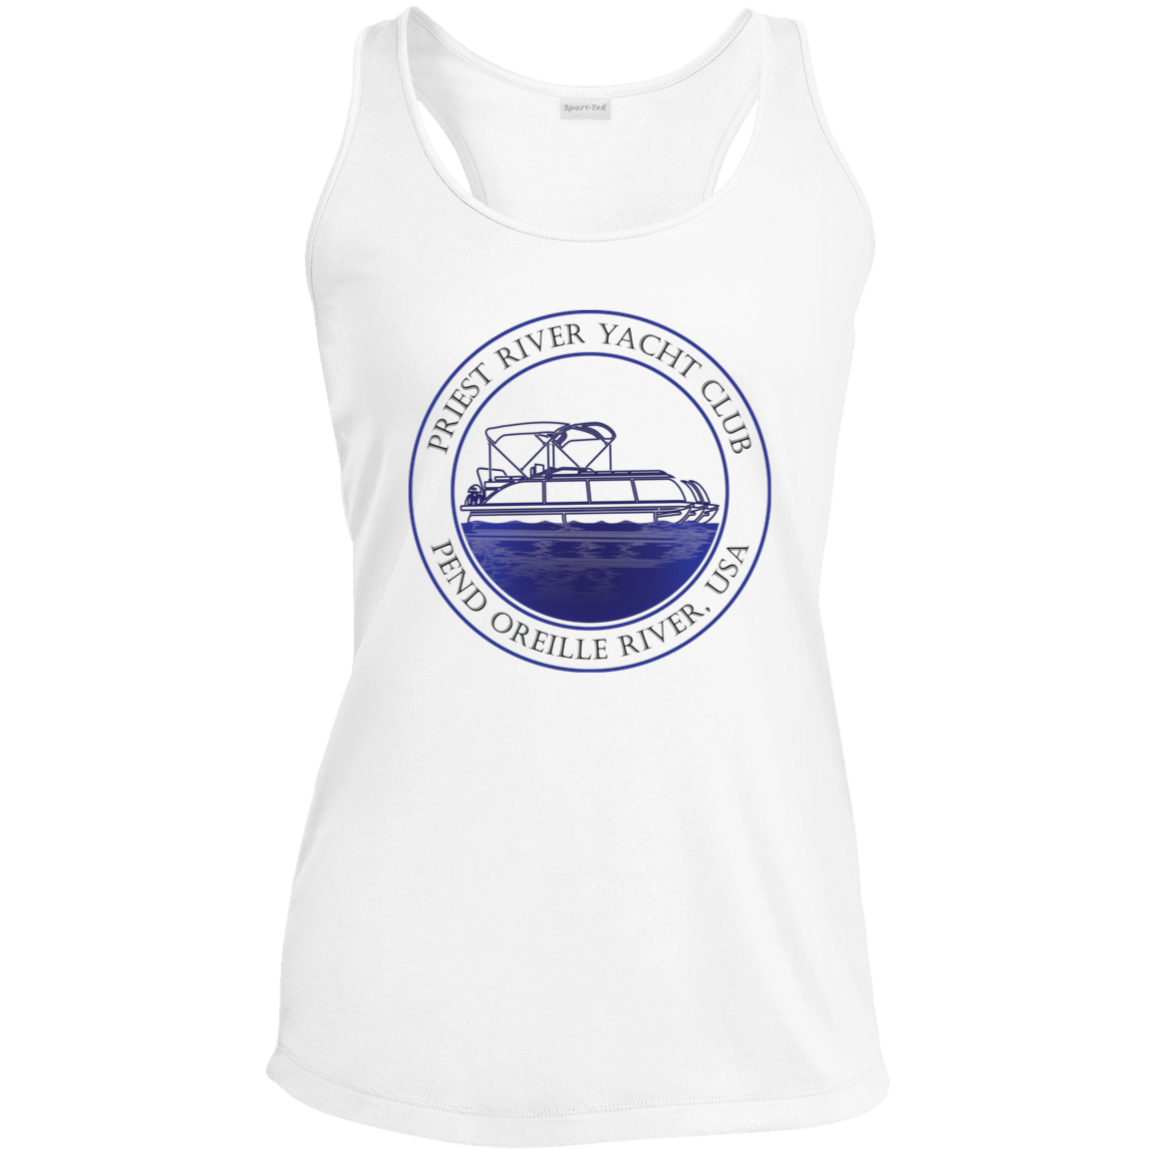 Priest River Yacht Club - Womens Racerback